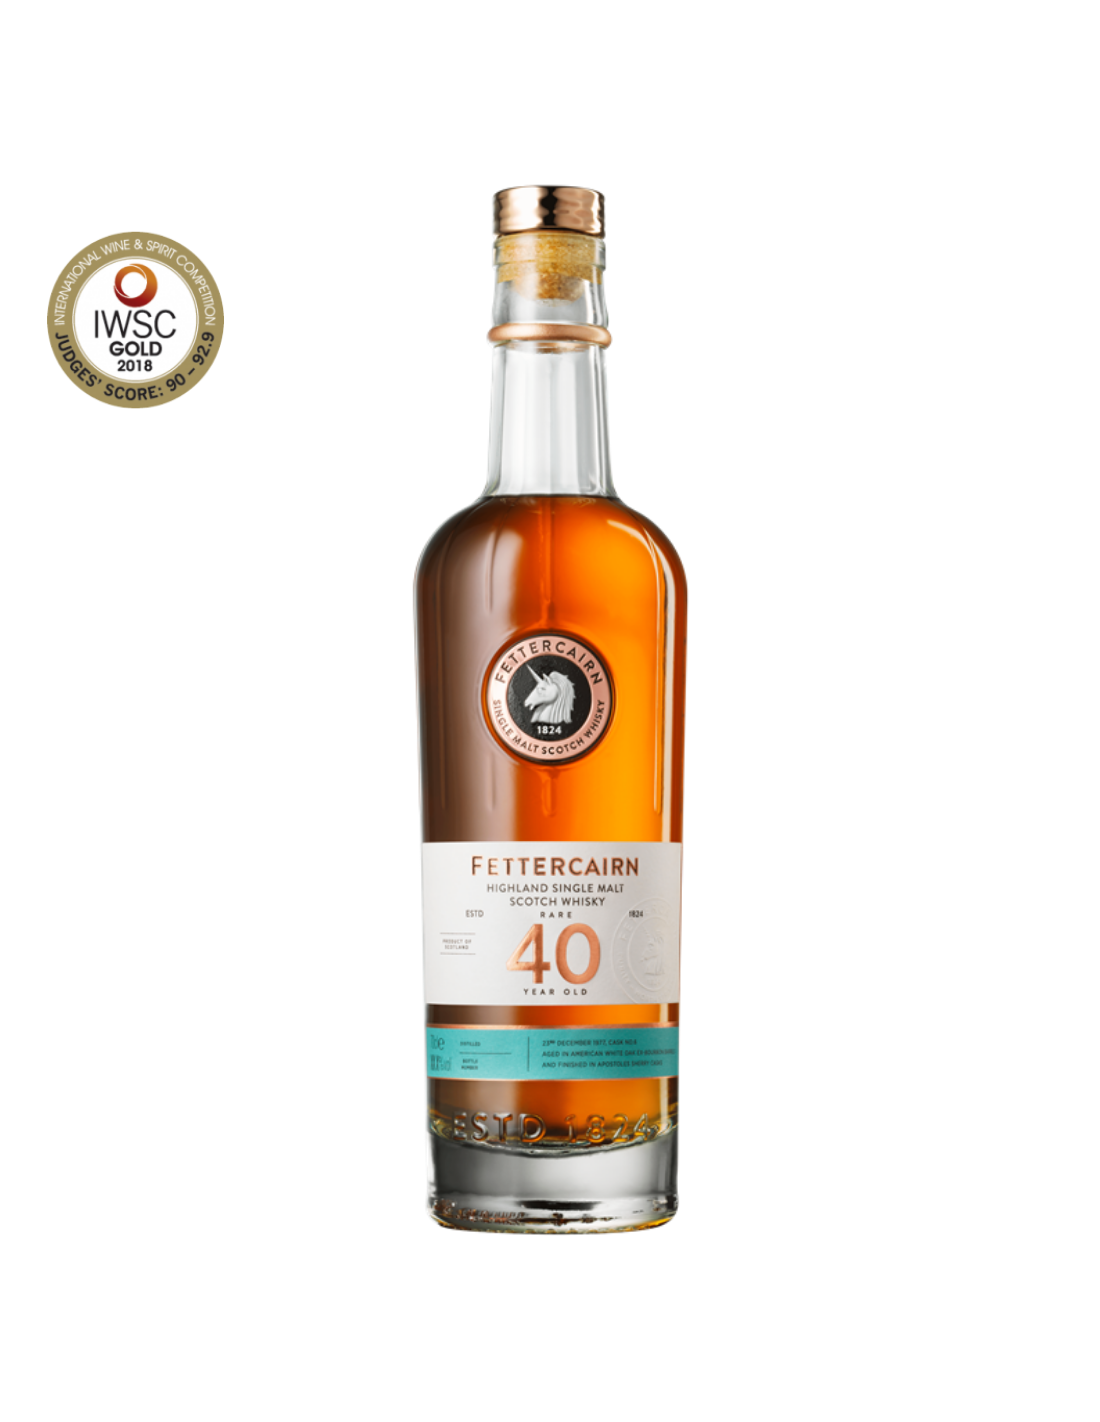 Whisky Fettercairn 40 Year Old Single Malt Scotch, 0.7L, 48.9% alc., Scotia alcooldiscount.ro